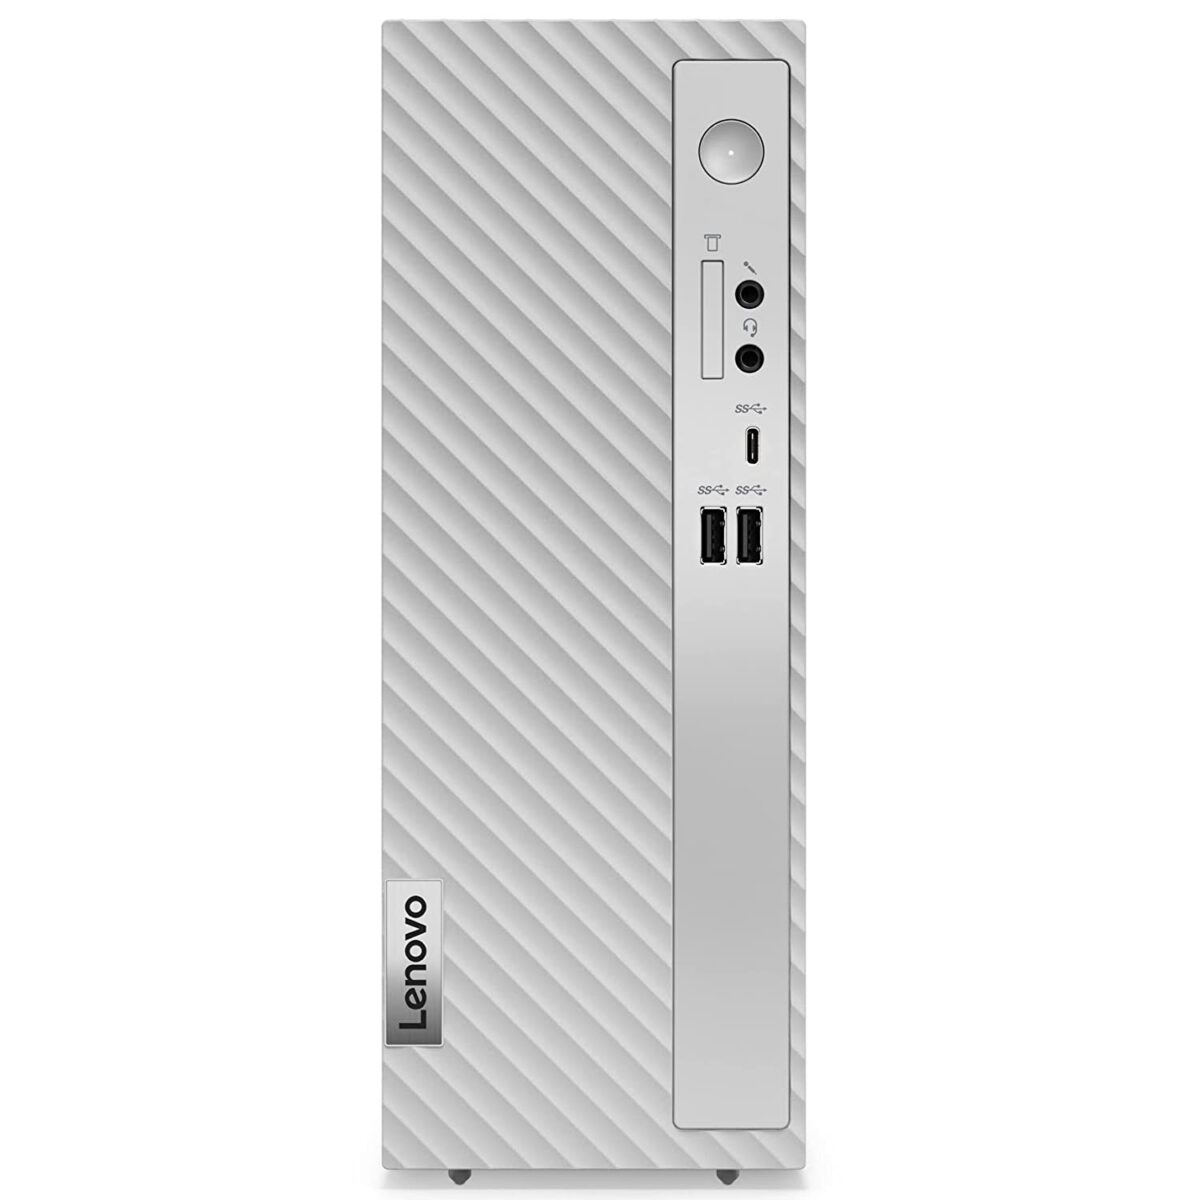 Lenovo IdeaCentre 3 Desktop 90SM001DIN ( 12th Gen Intel Core i3-12100 / 8GB ram / 256GB SSD ) Price, Specs and Features